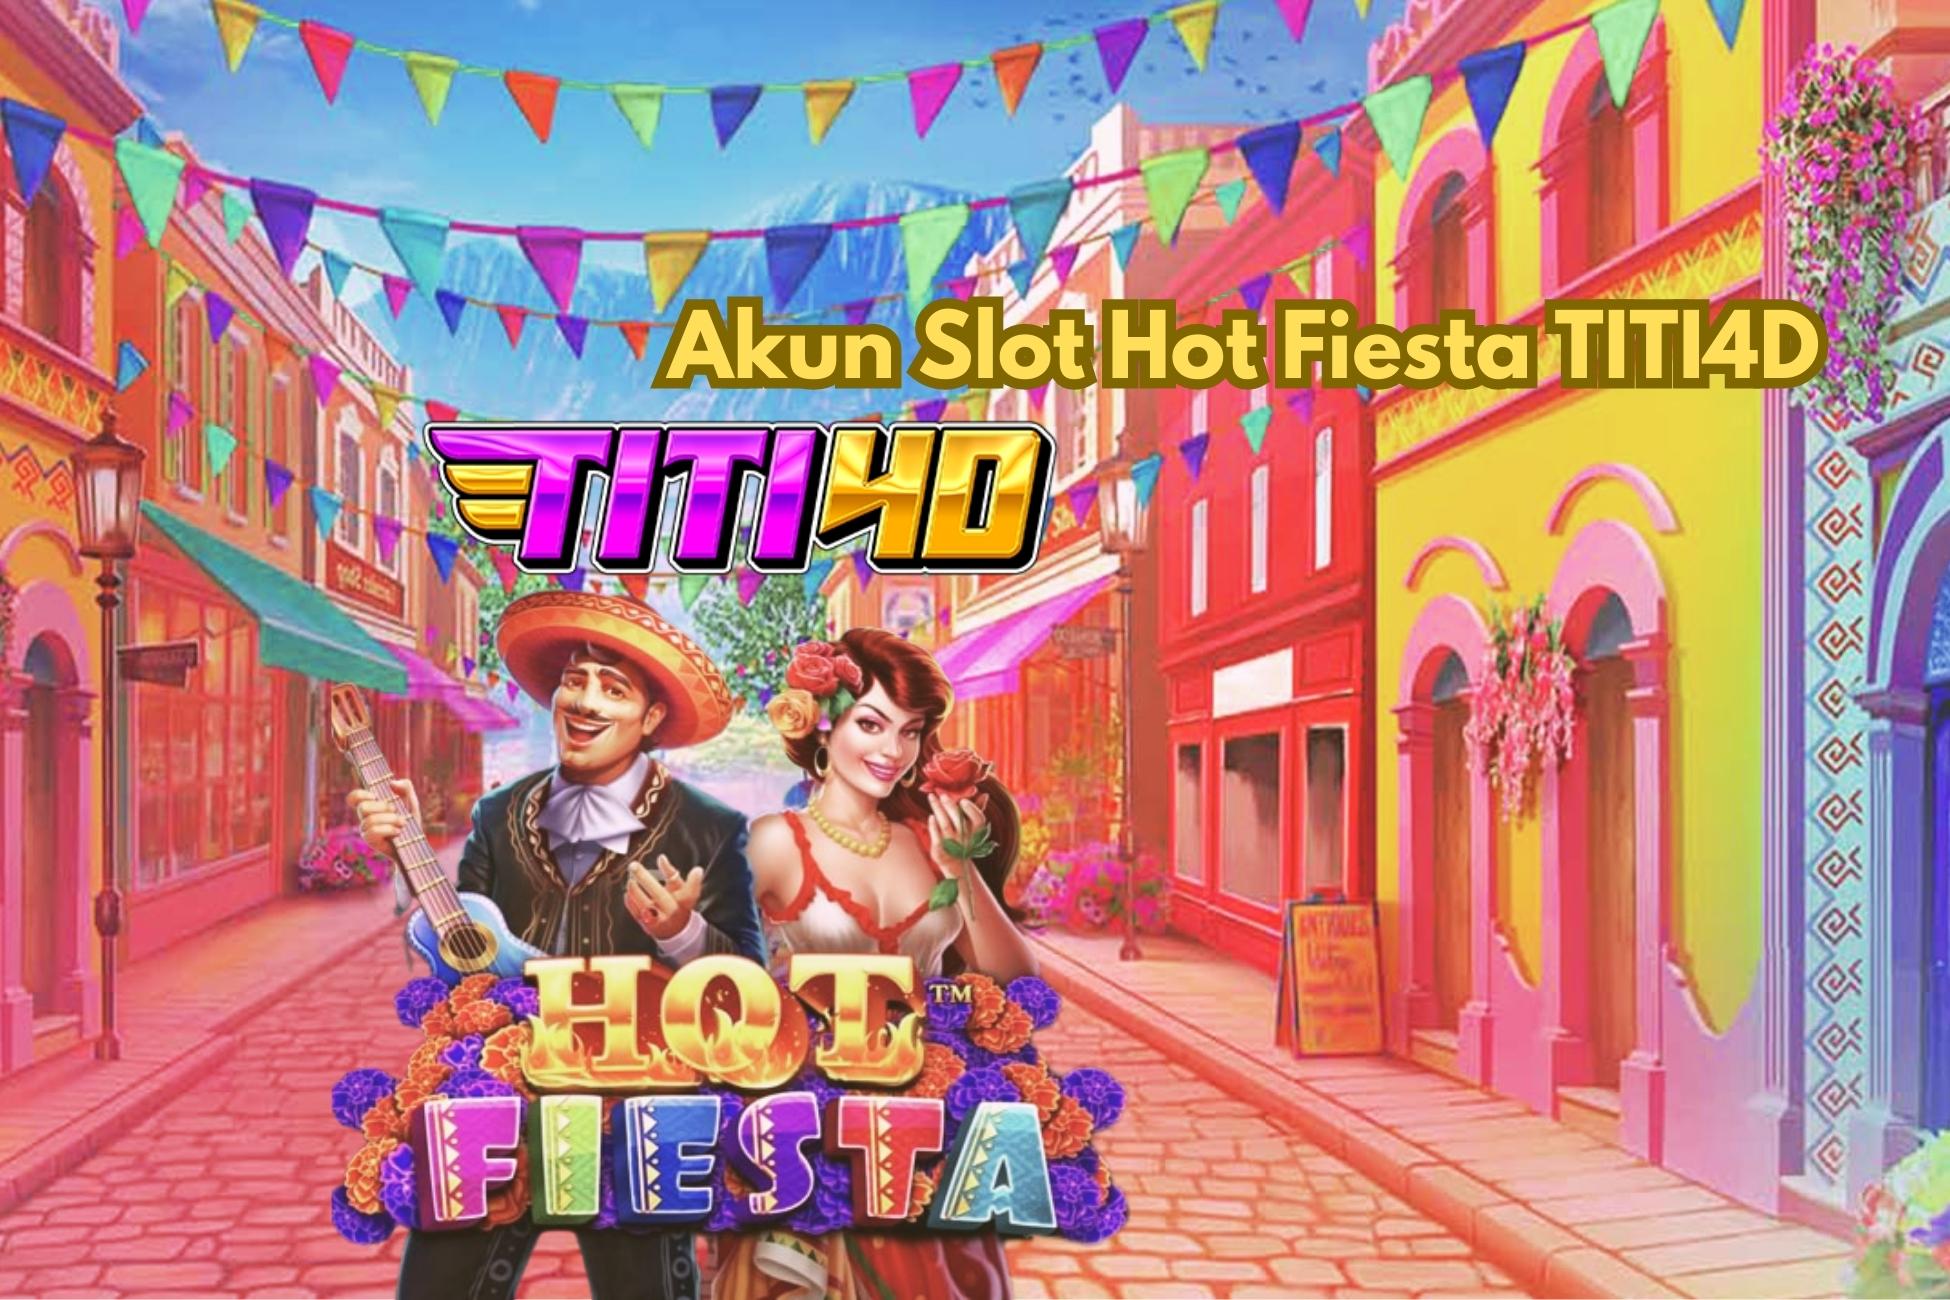 Akun Slot Hot Fiesta TITI4D